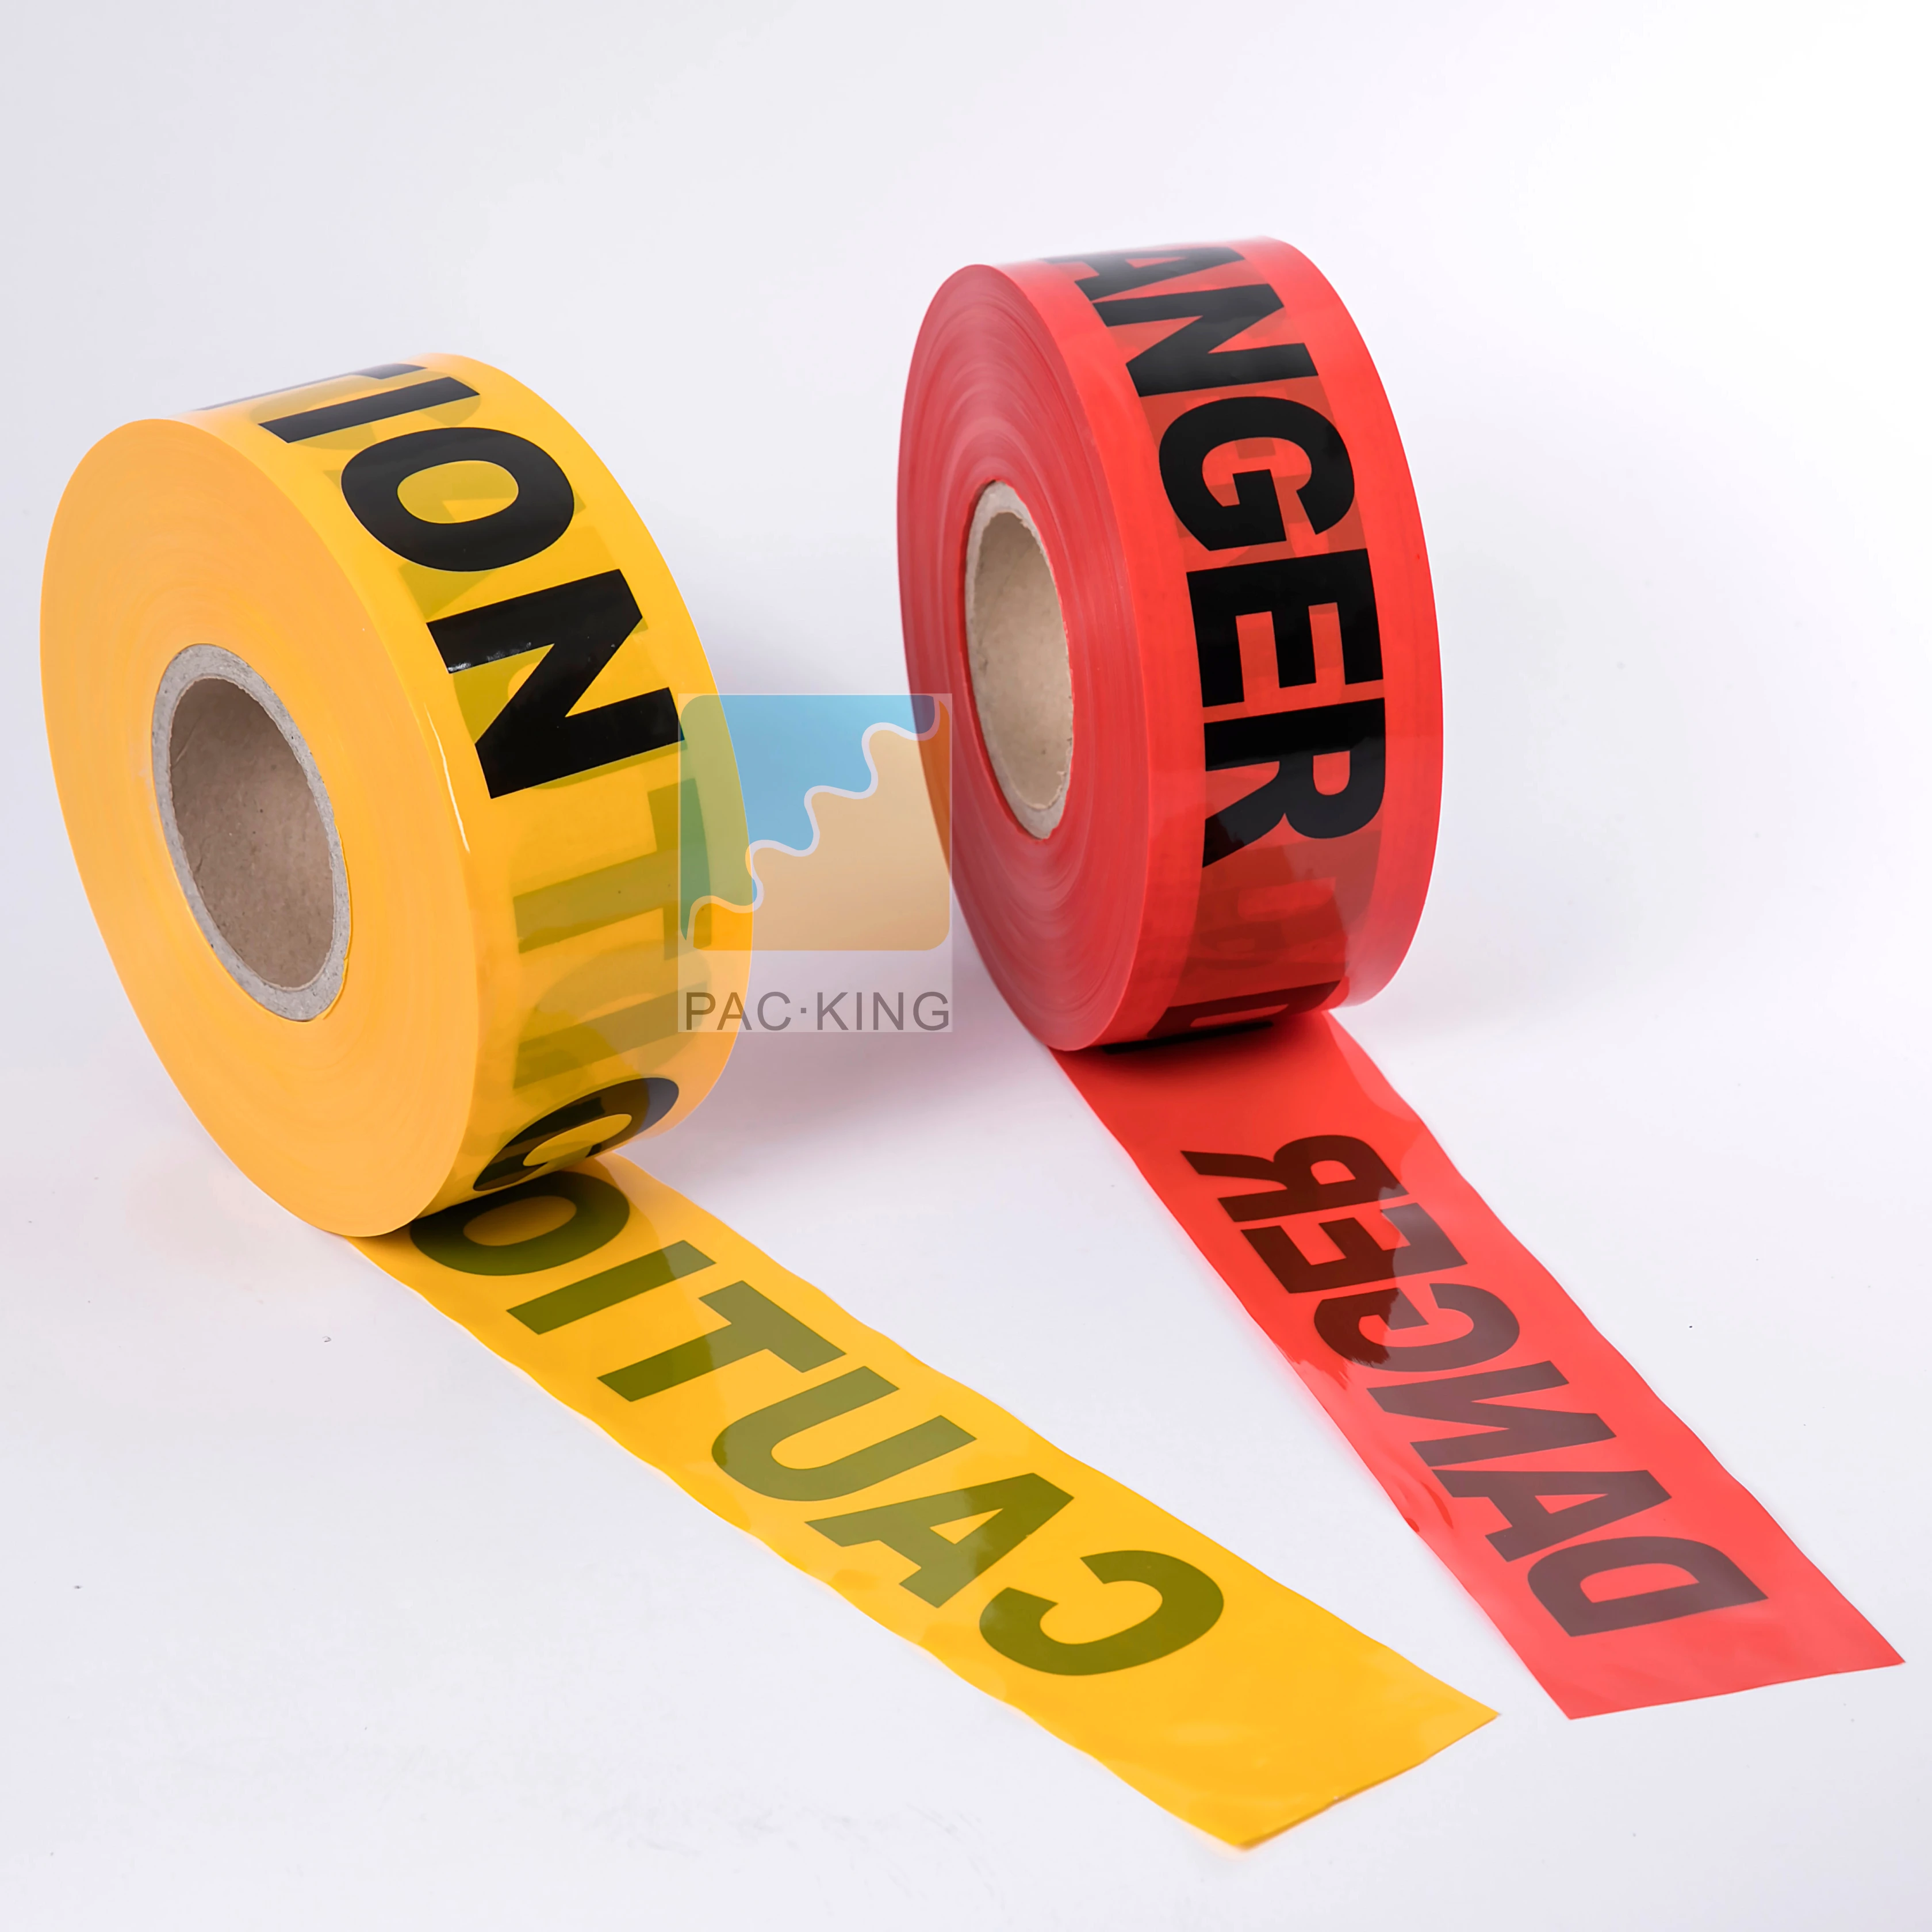 
Police Danger Barricade PE Plastic Walkway Marking Warning Caution Tape  (1600079015254)